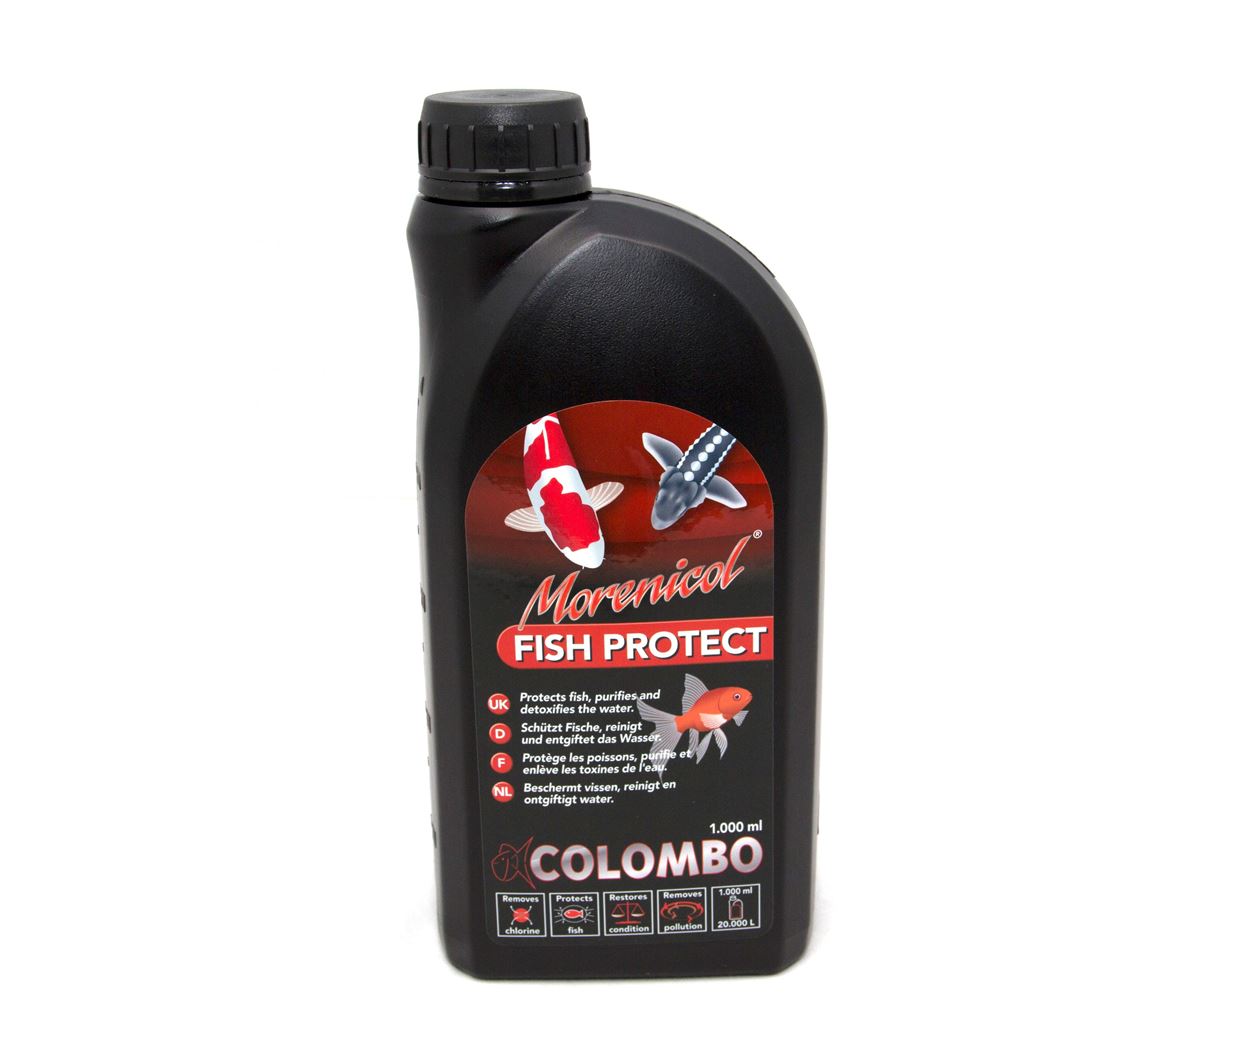 Colombo fish protect